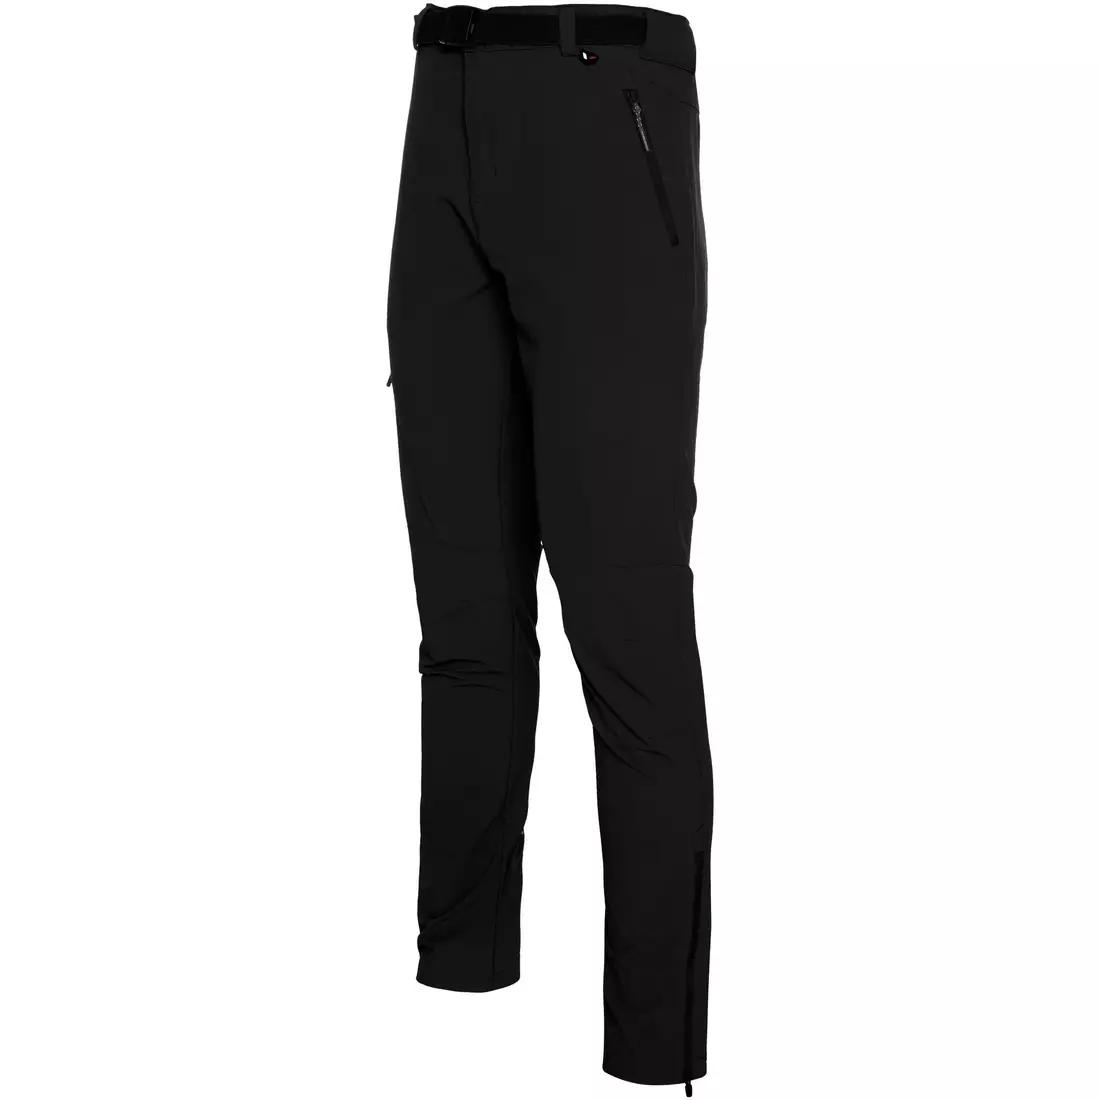 VIKING Men's sports and trekking pants, Expander 900/23/2309/09 black